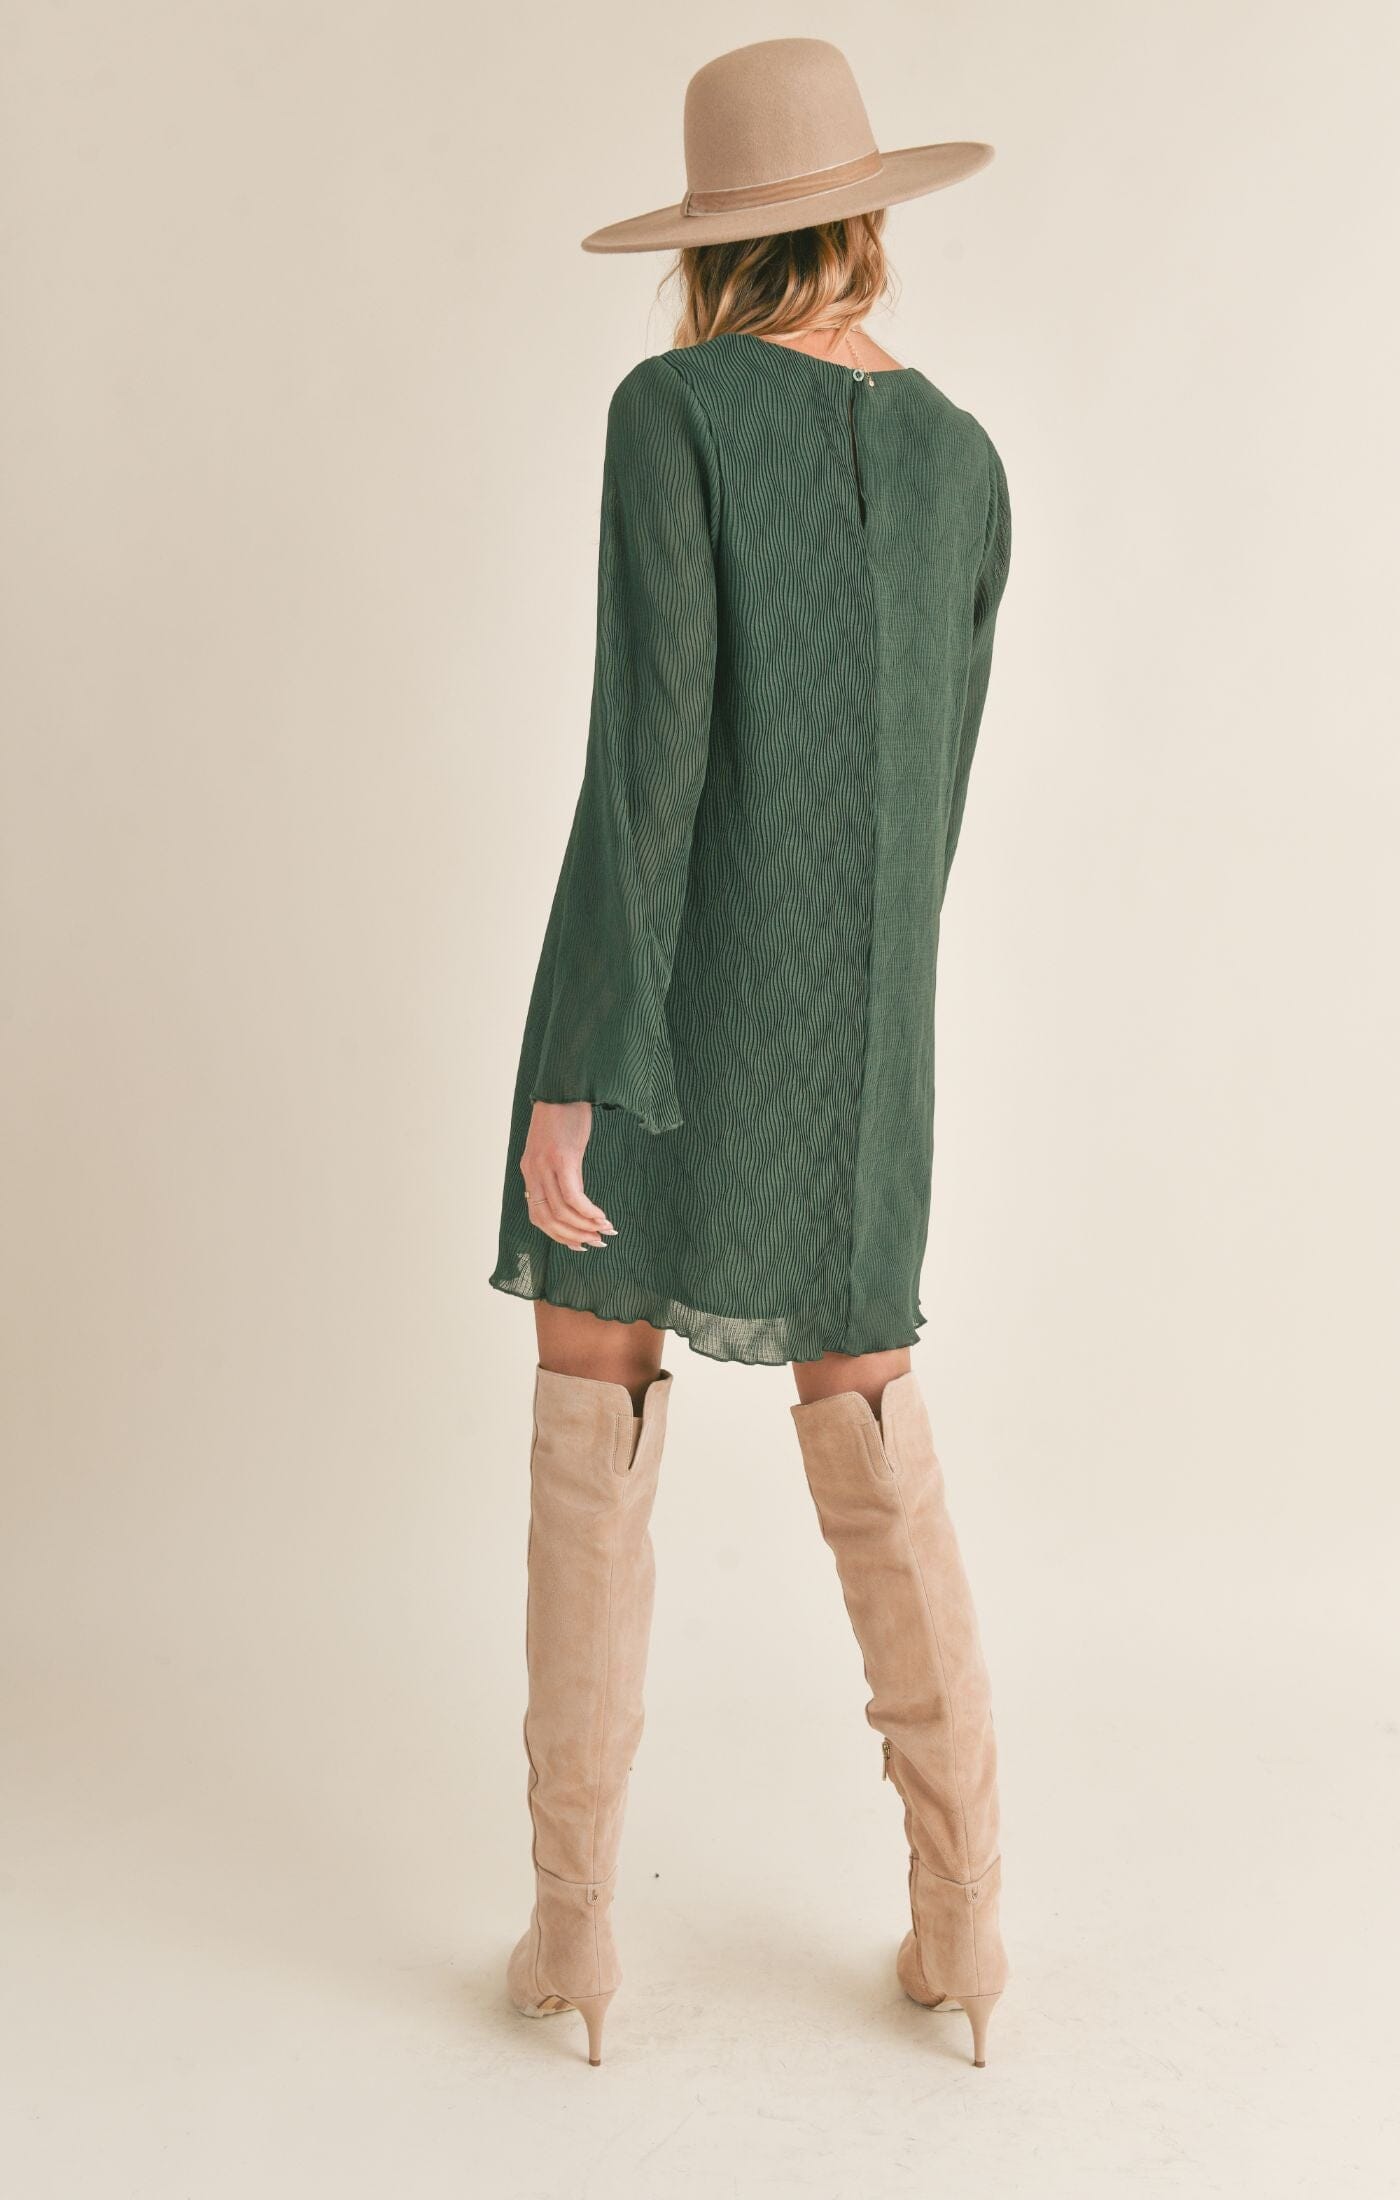 FORREST GREEN DRESS Dress SADIE AND SAGE 